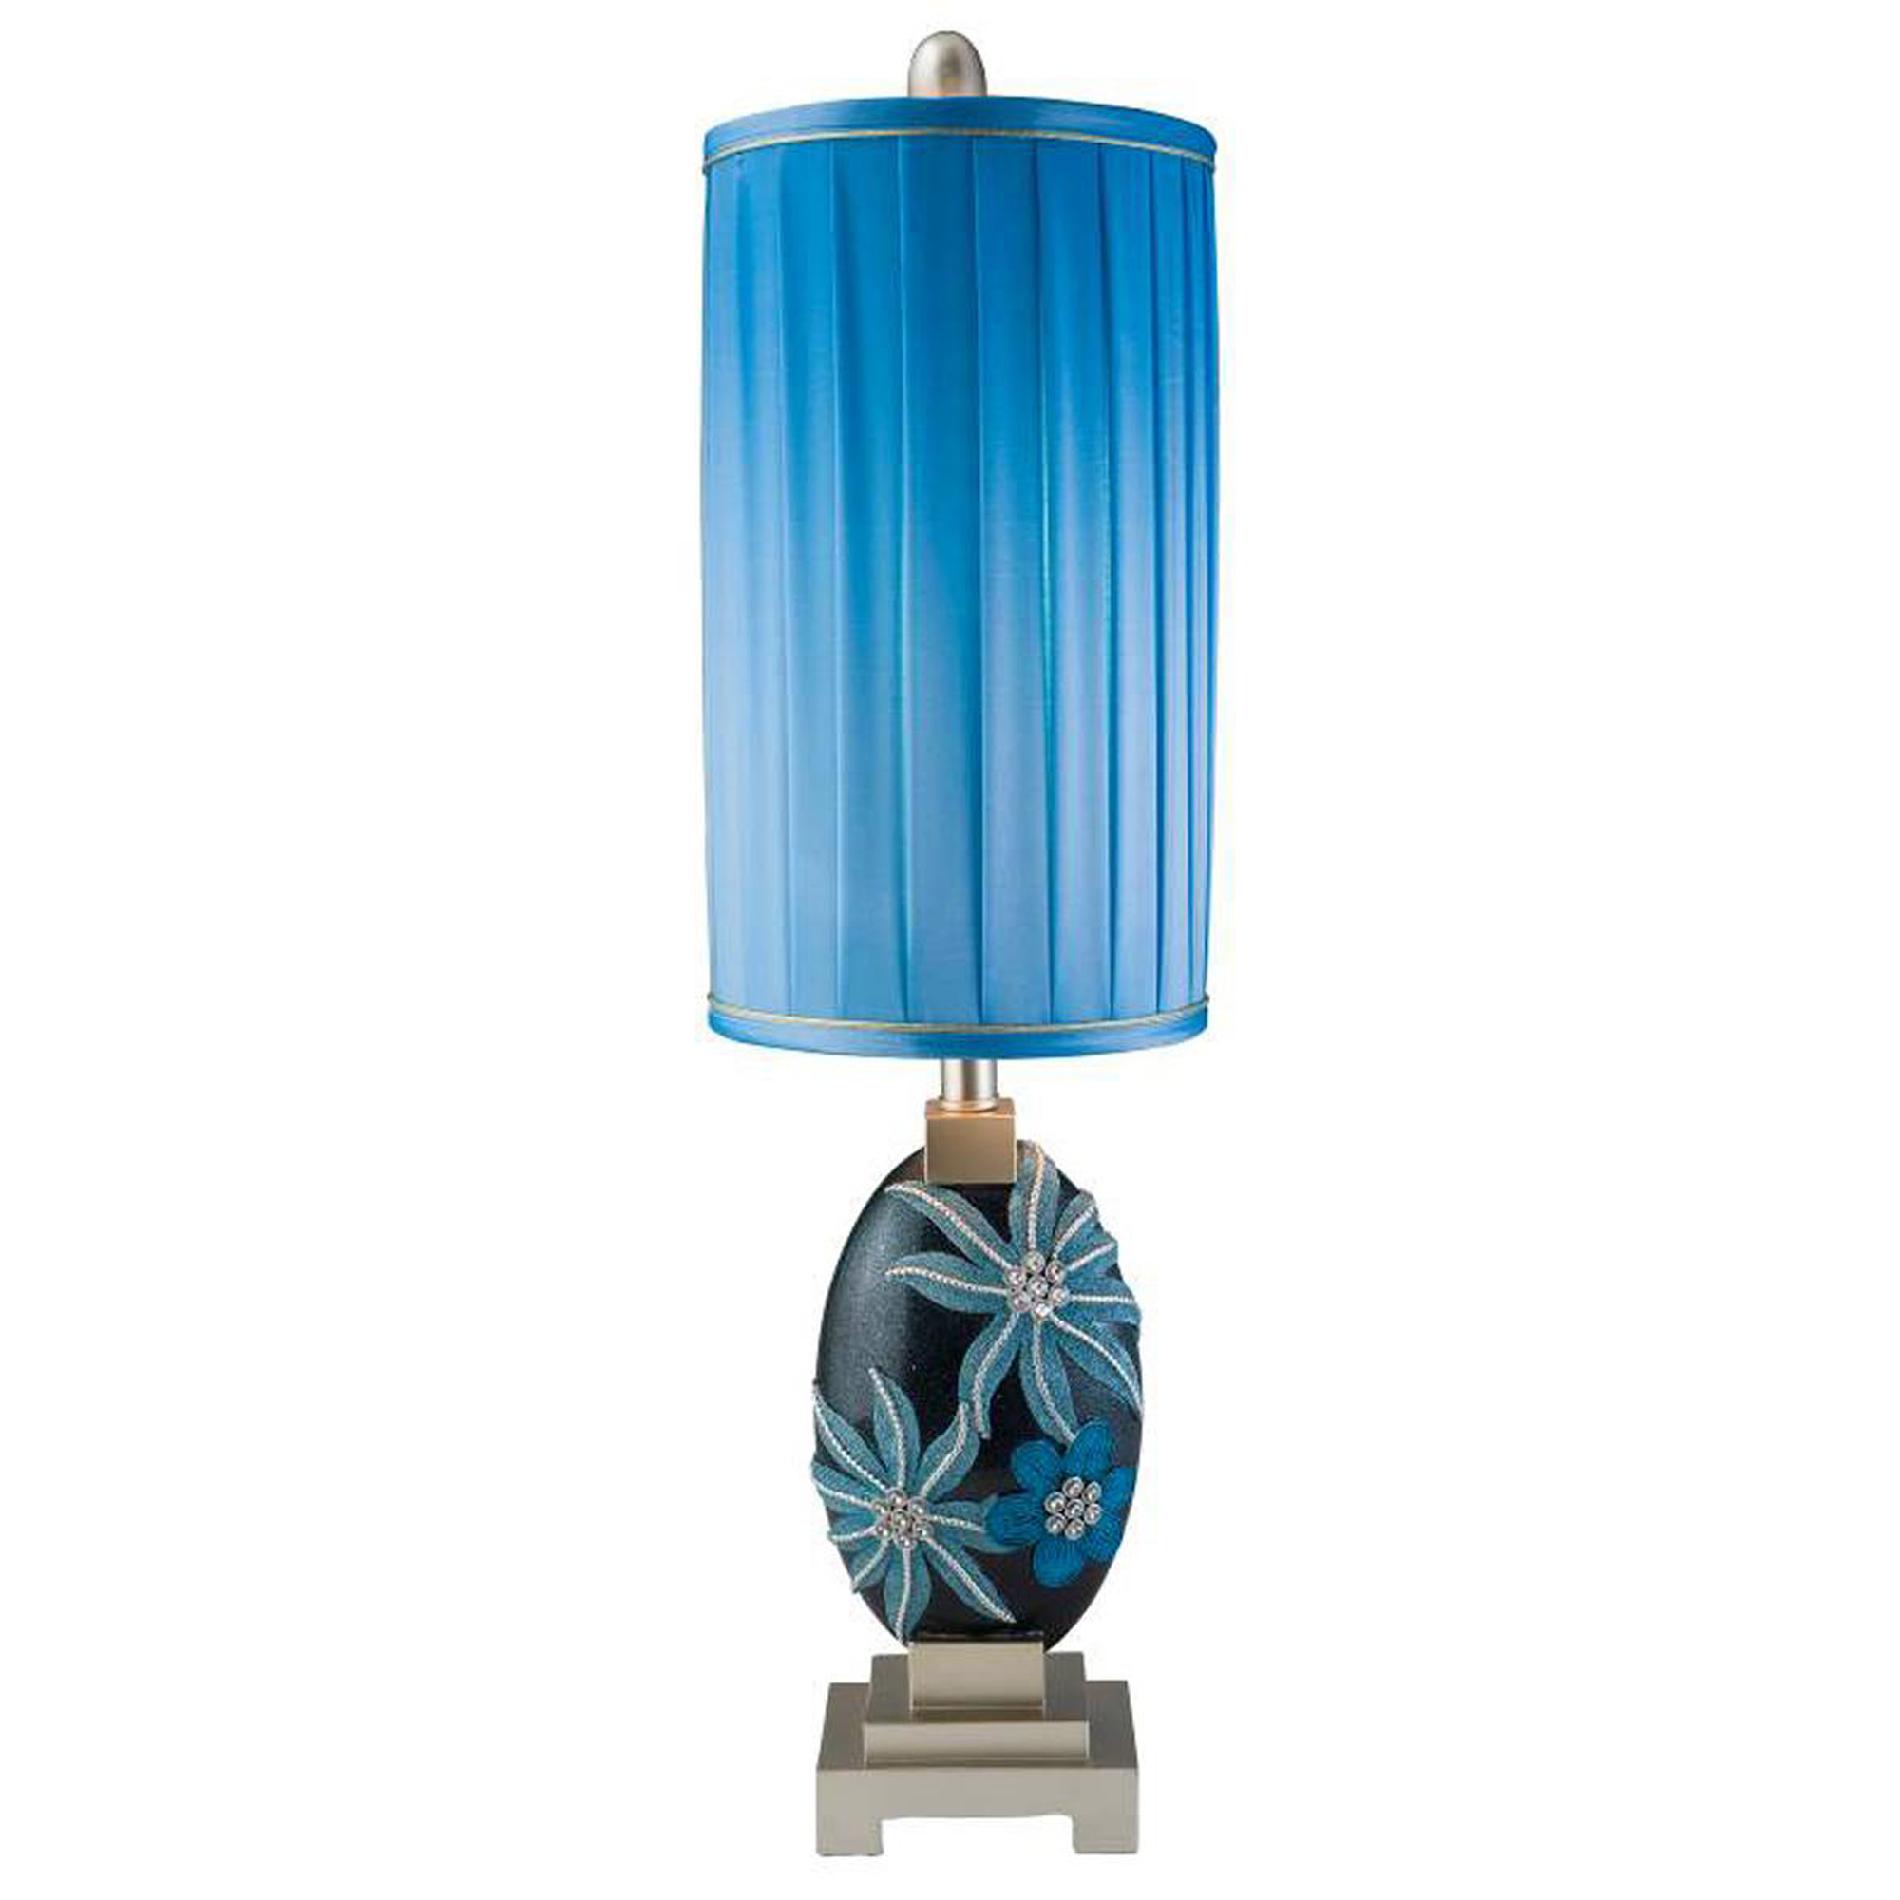 Ore International 31 Inch Aqua Demeter Table Lamp